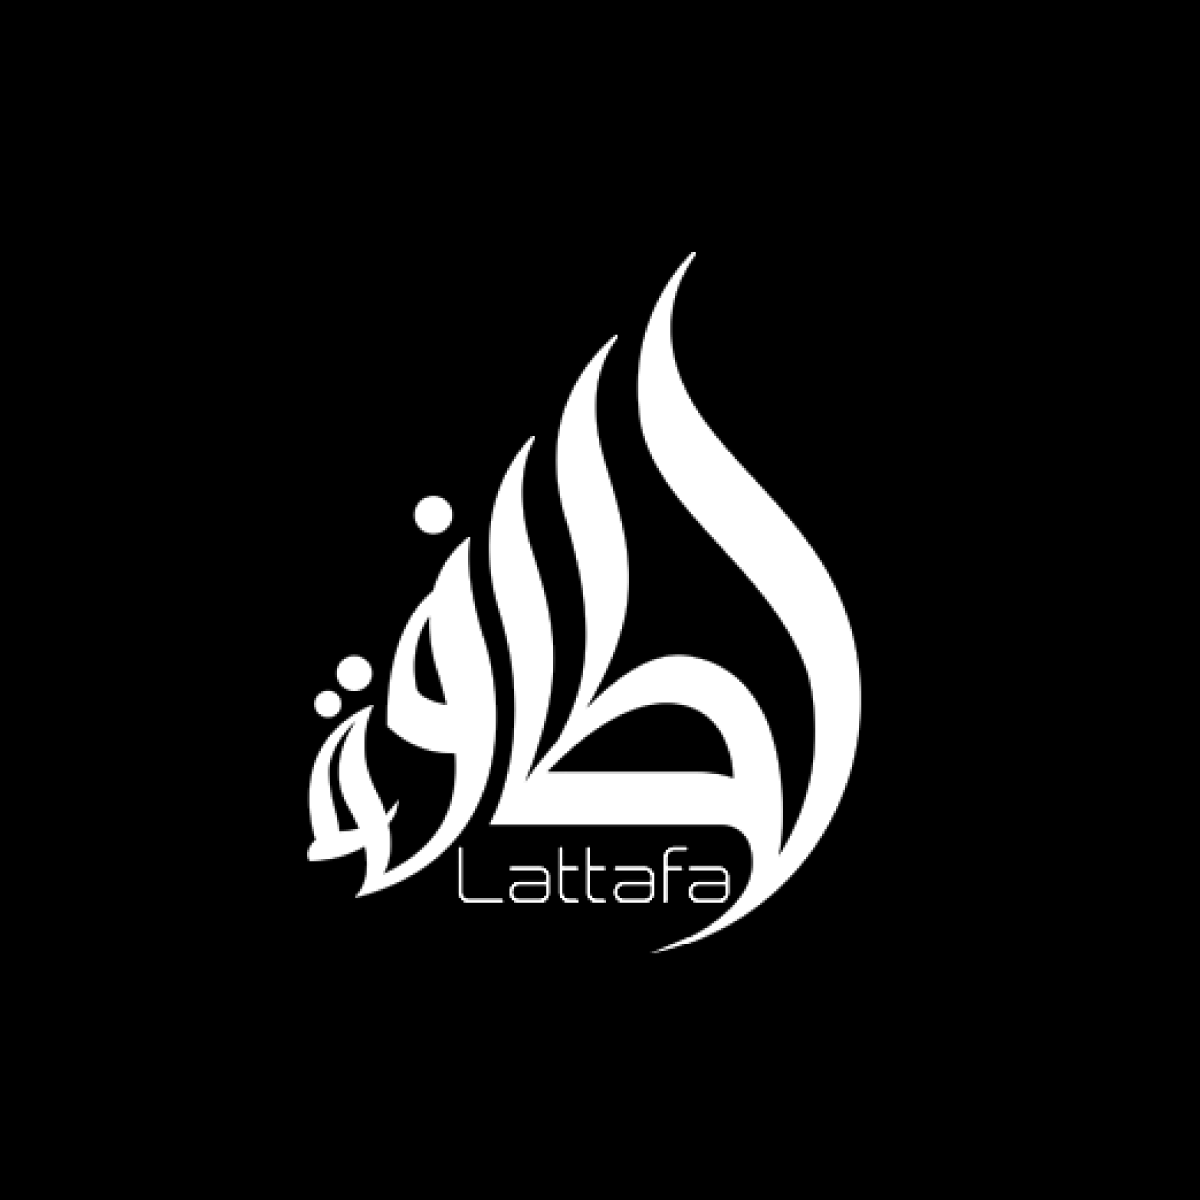 Lattafa (לטאפה)